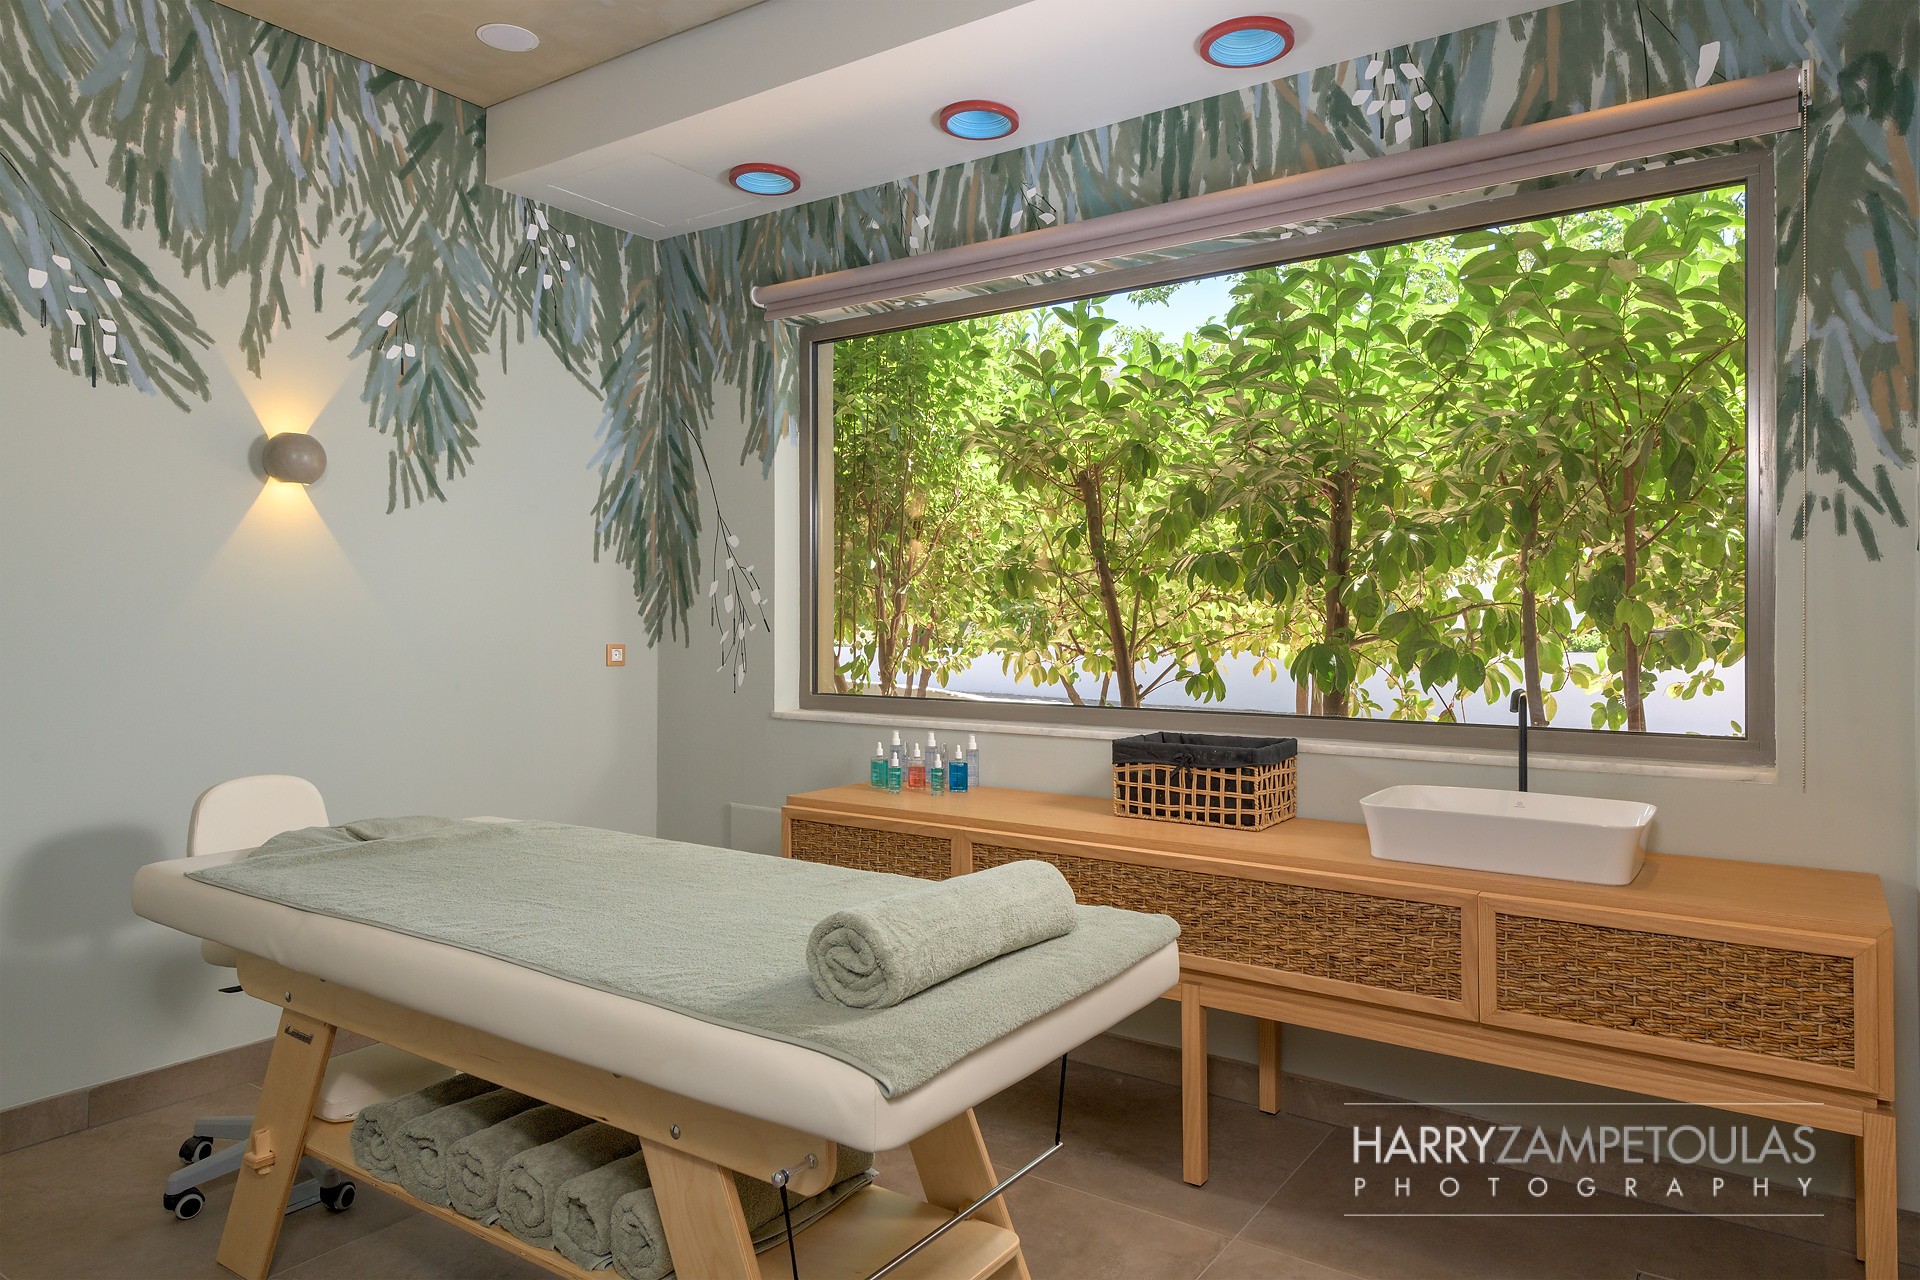 SPA-Treatment-Room-2 Porto Angeli Resort Hotel - Hotel Photography Harry Zampetoulas 